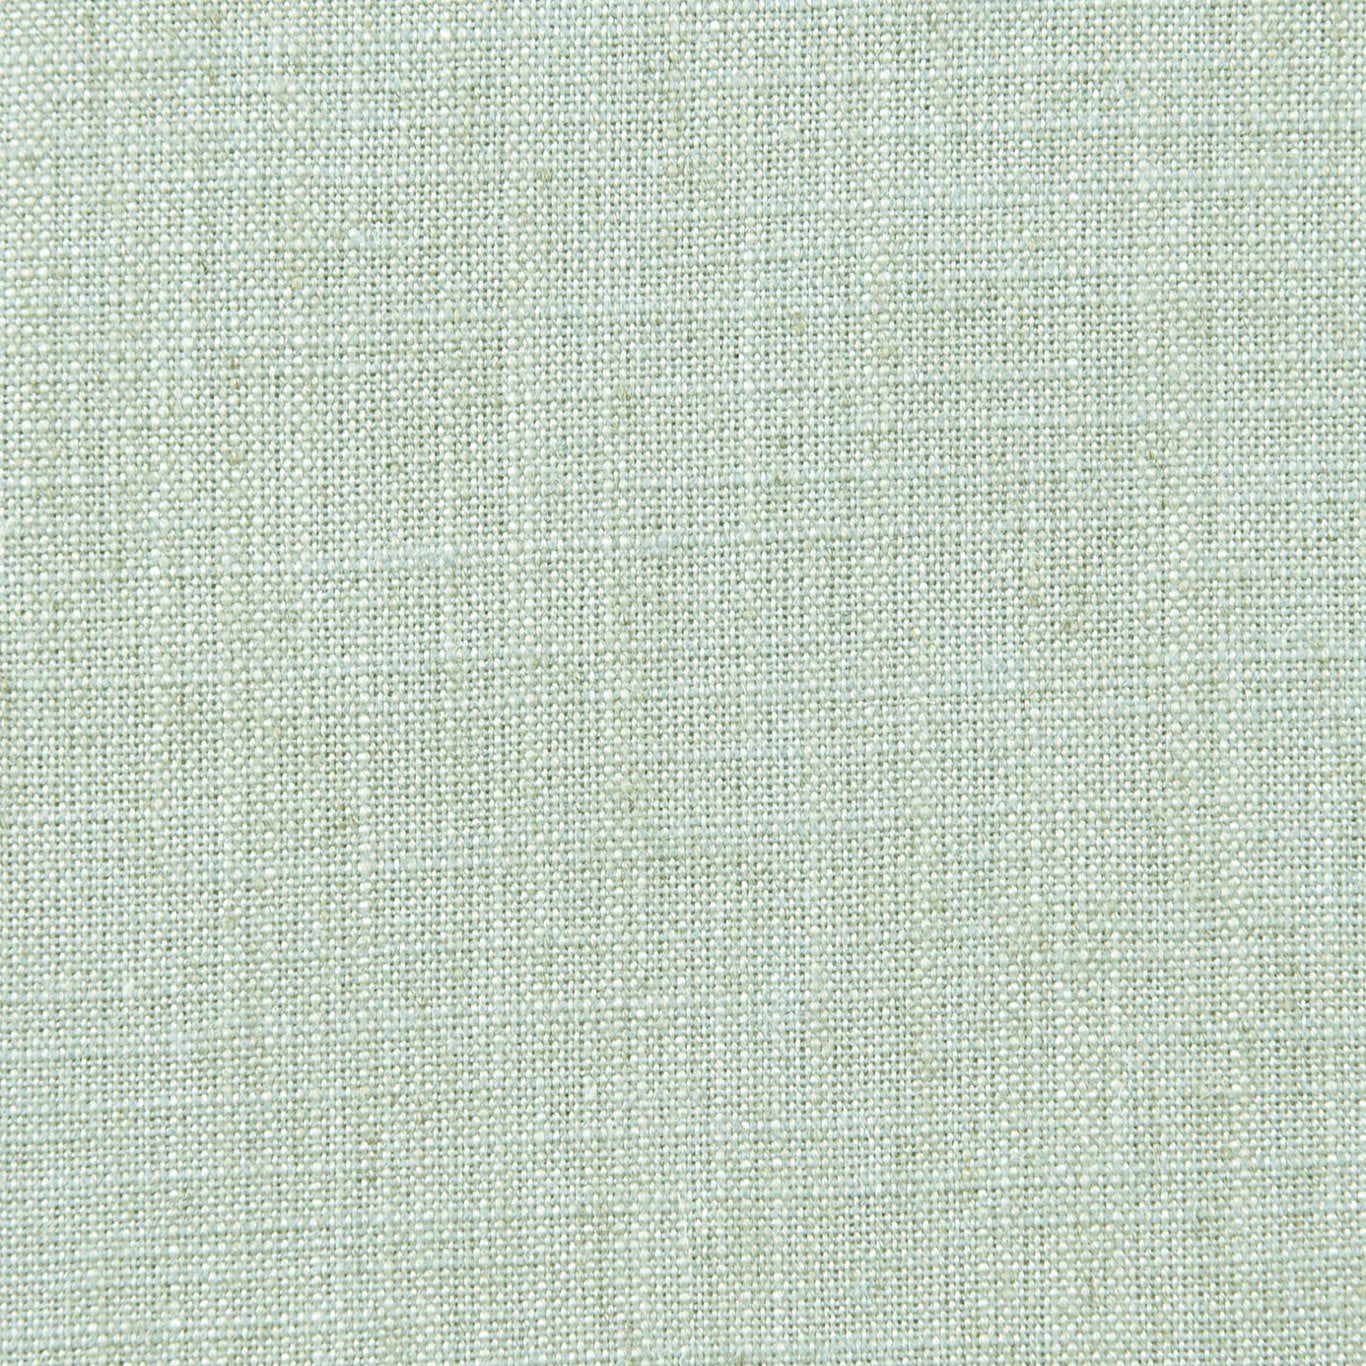 Biarritz Fabric by Clarke & Clarke - F0965/29 - Mint